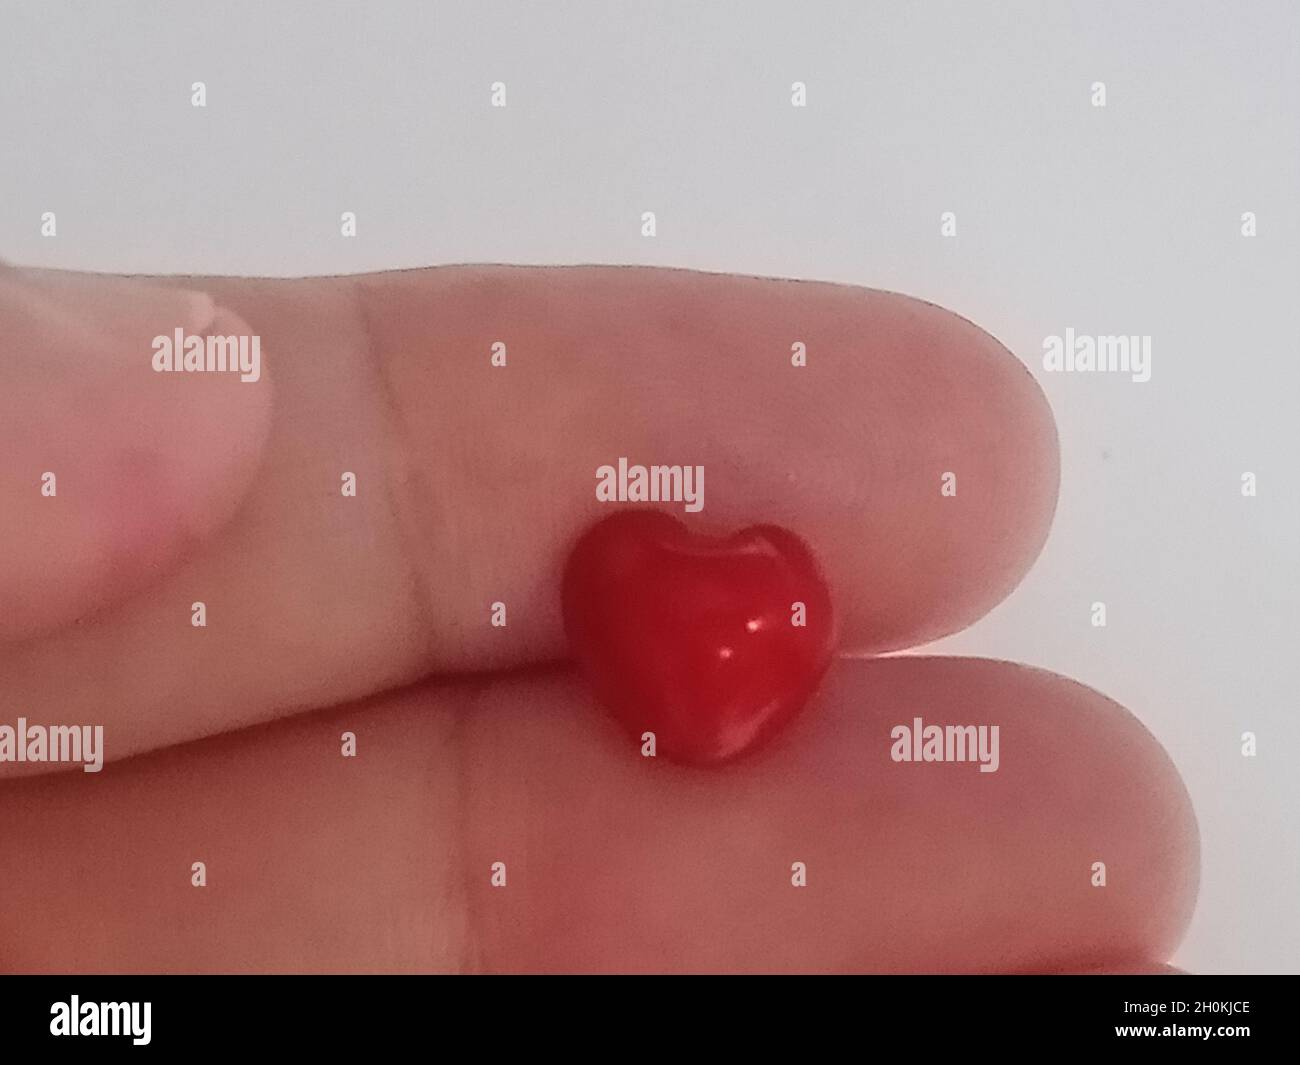 hand hold red heart shape saga seeds Stock Photo